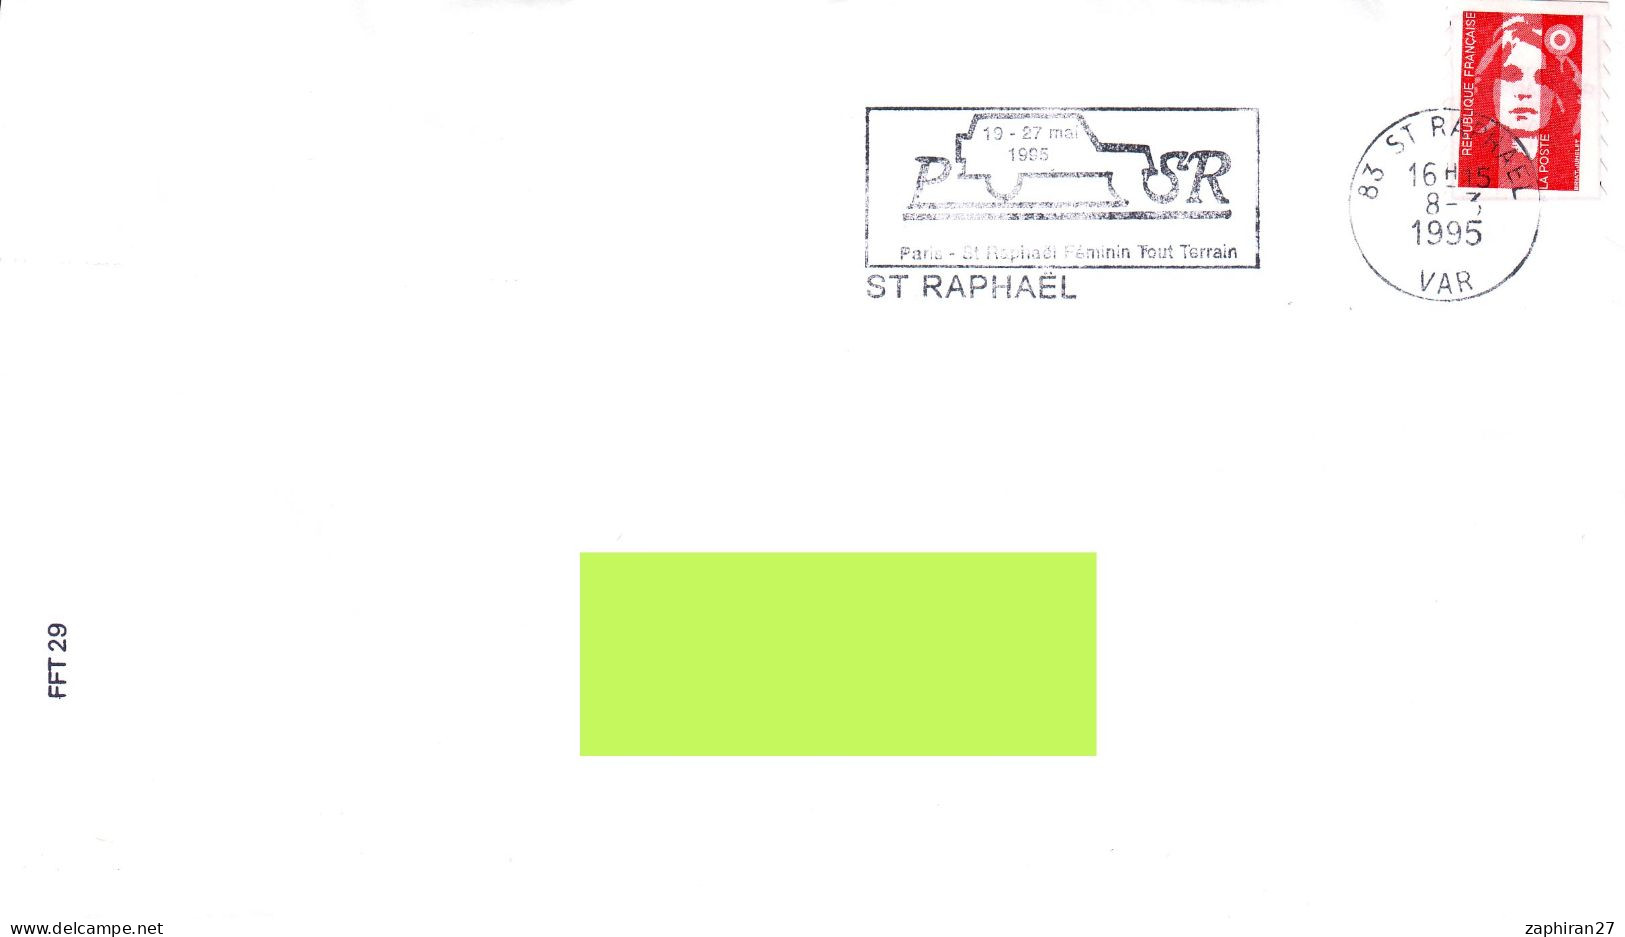 83 FLAMME ST RAPHAEL (VAR) PARIS ST RAPHAEL / FEMININ TOUT TERRAIN 19-27 Mai 1995  #988# - Auto's